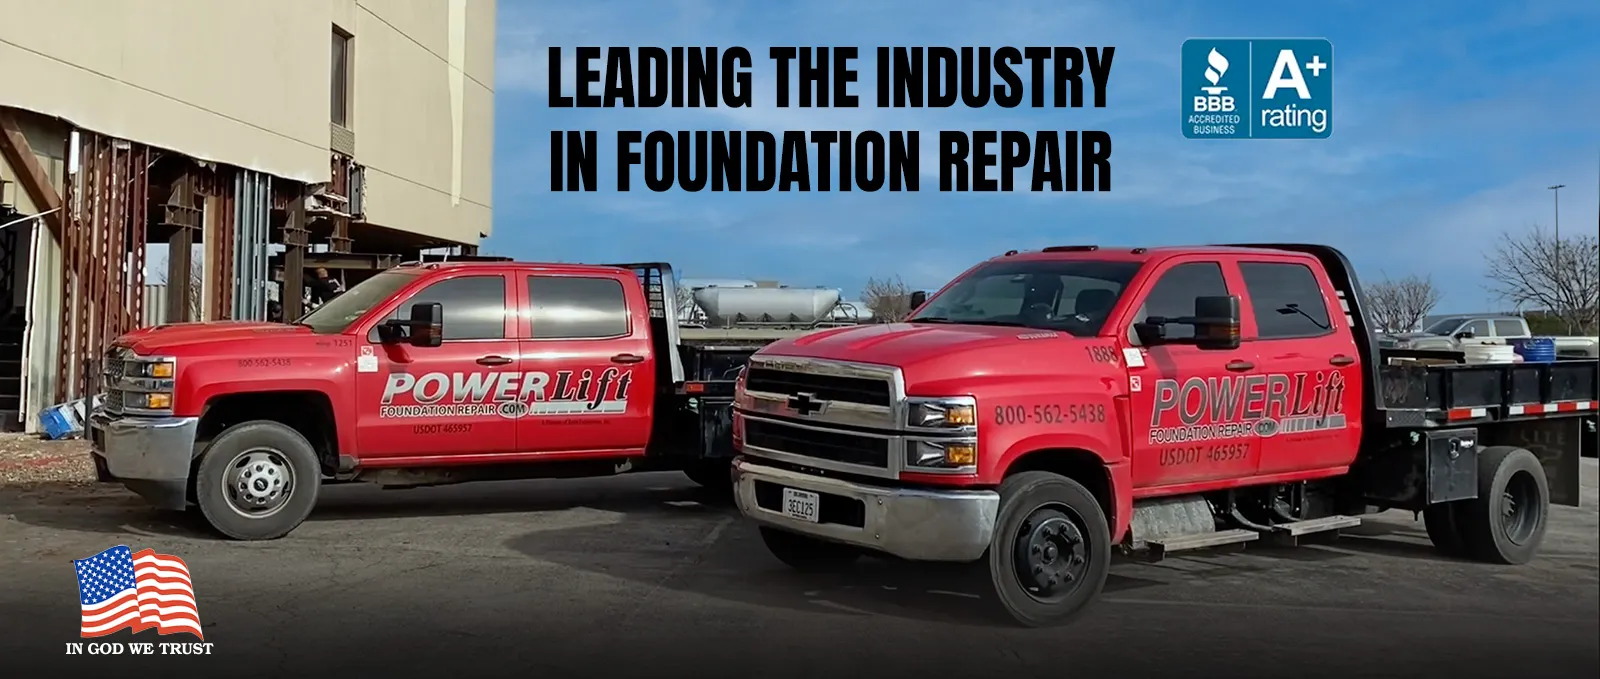 PowerLift Foundation Repair Company